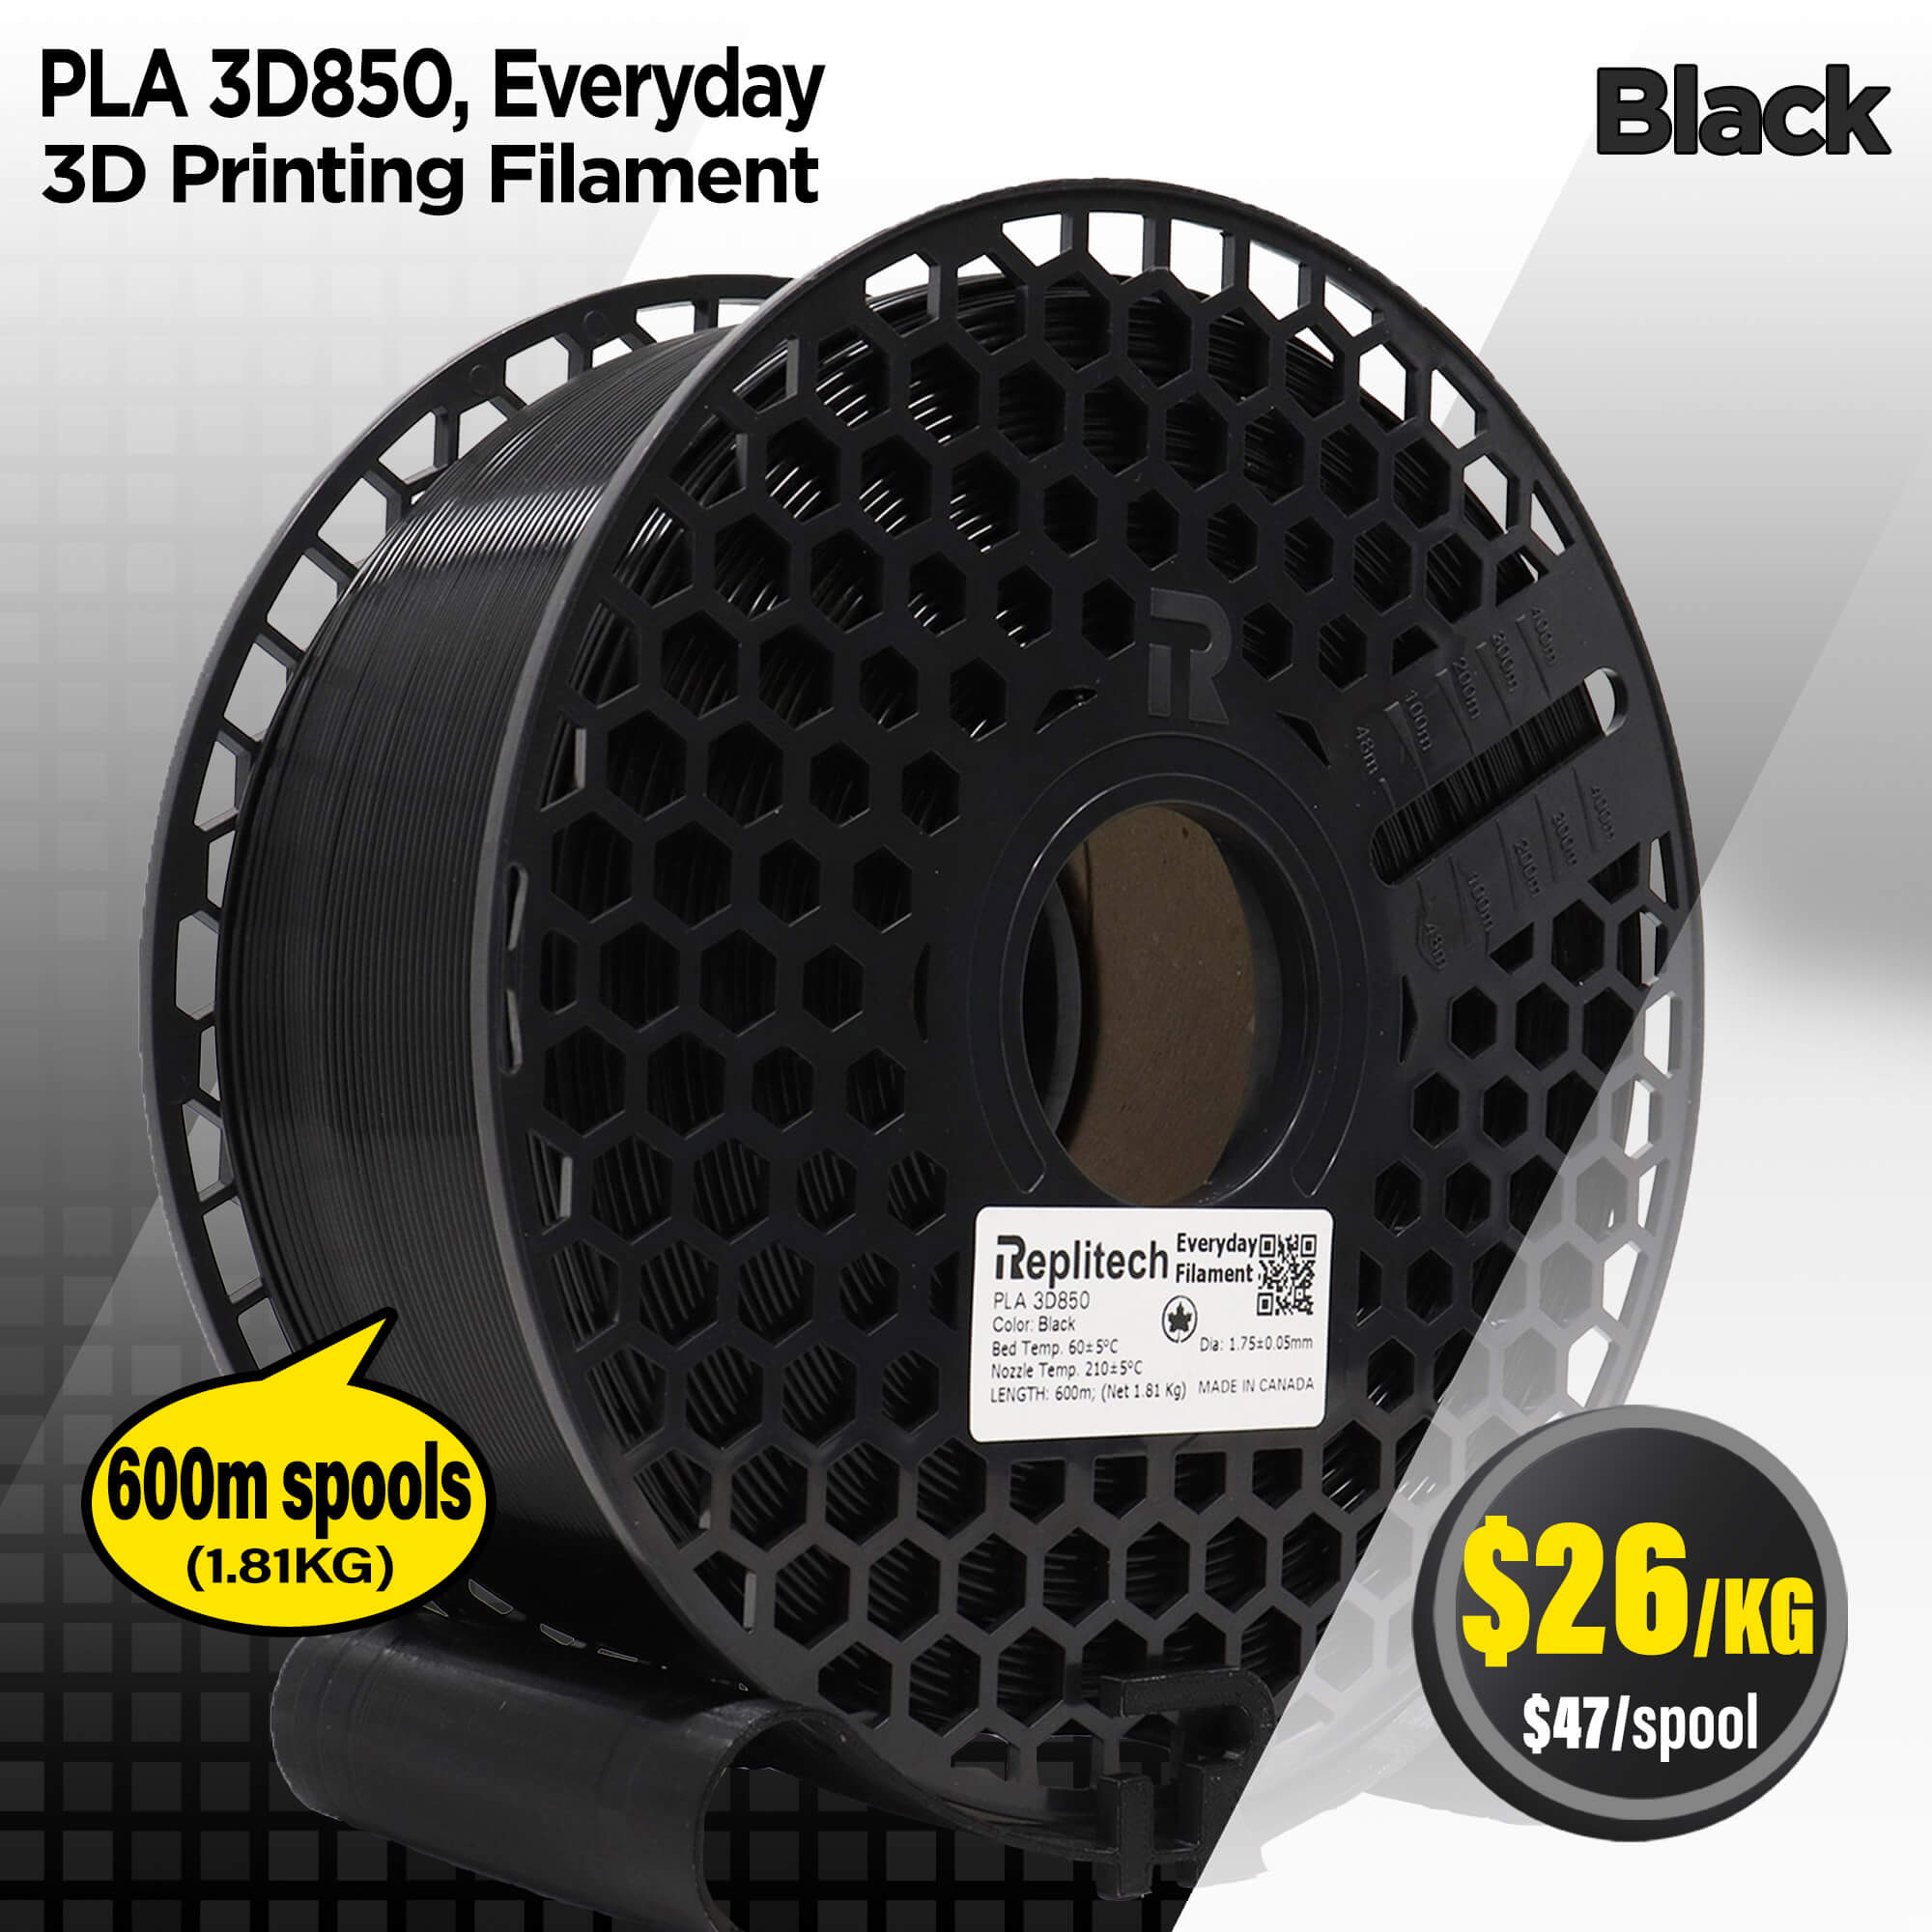 PLA 3D850 Everyday Black